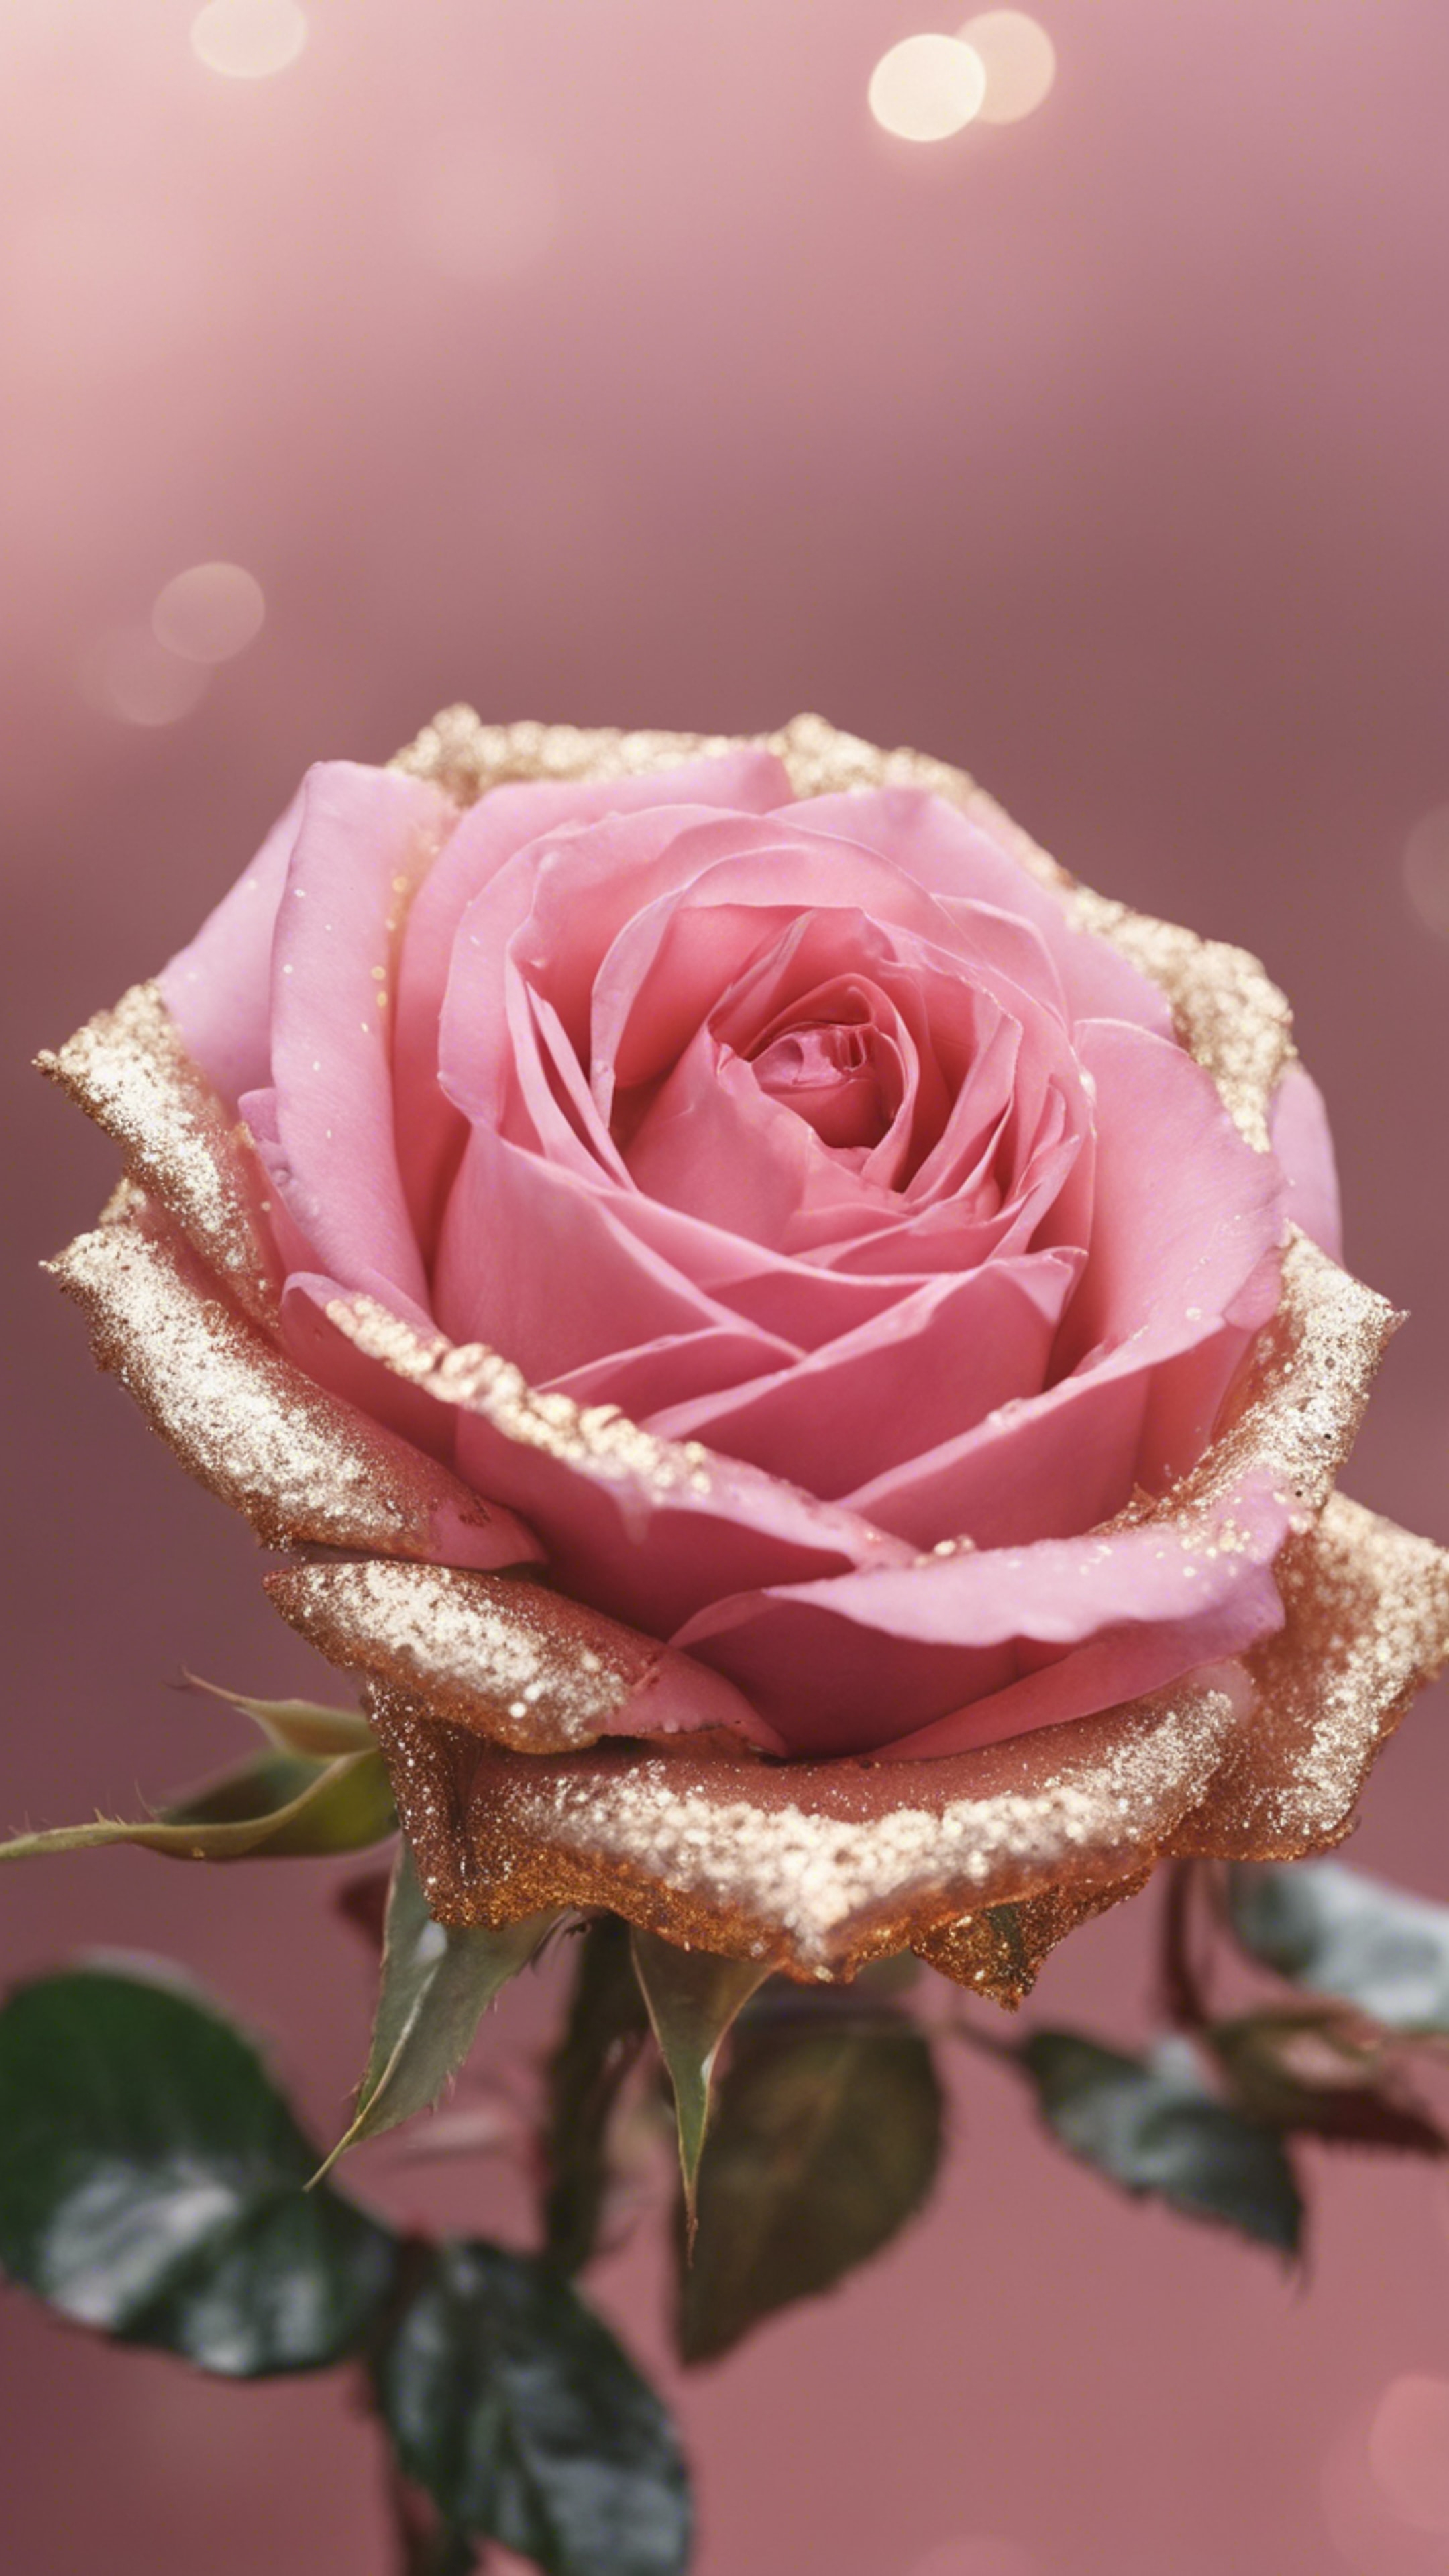 A closeup view of a beautiful pink rose with gold glittered edges. Papel de parede[3875274ebd404c0da9bb]